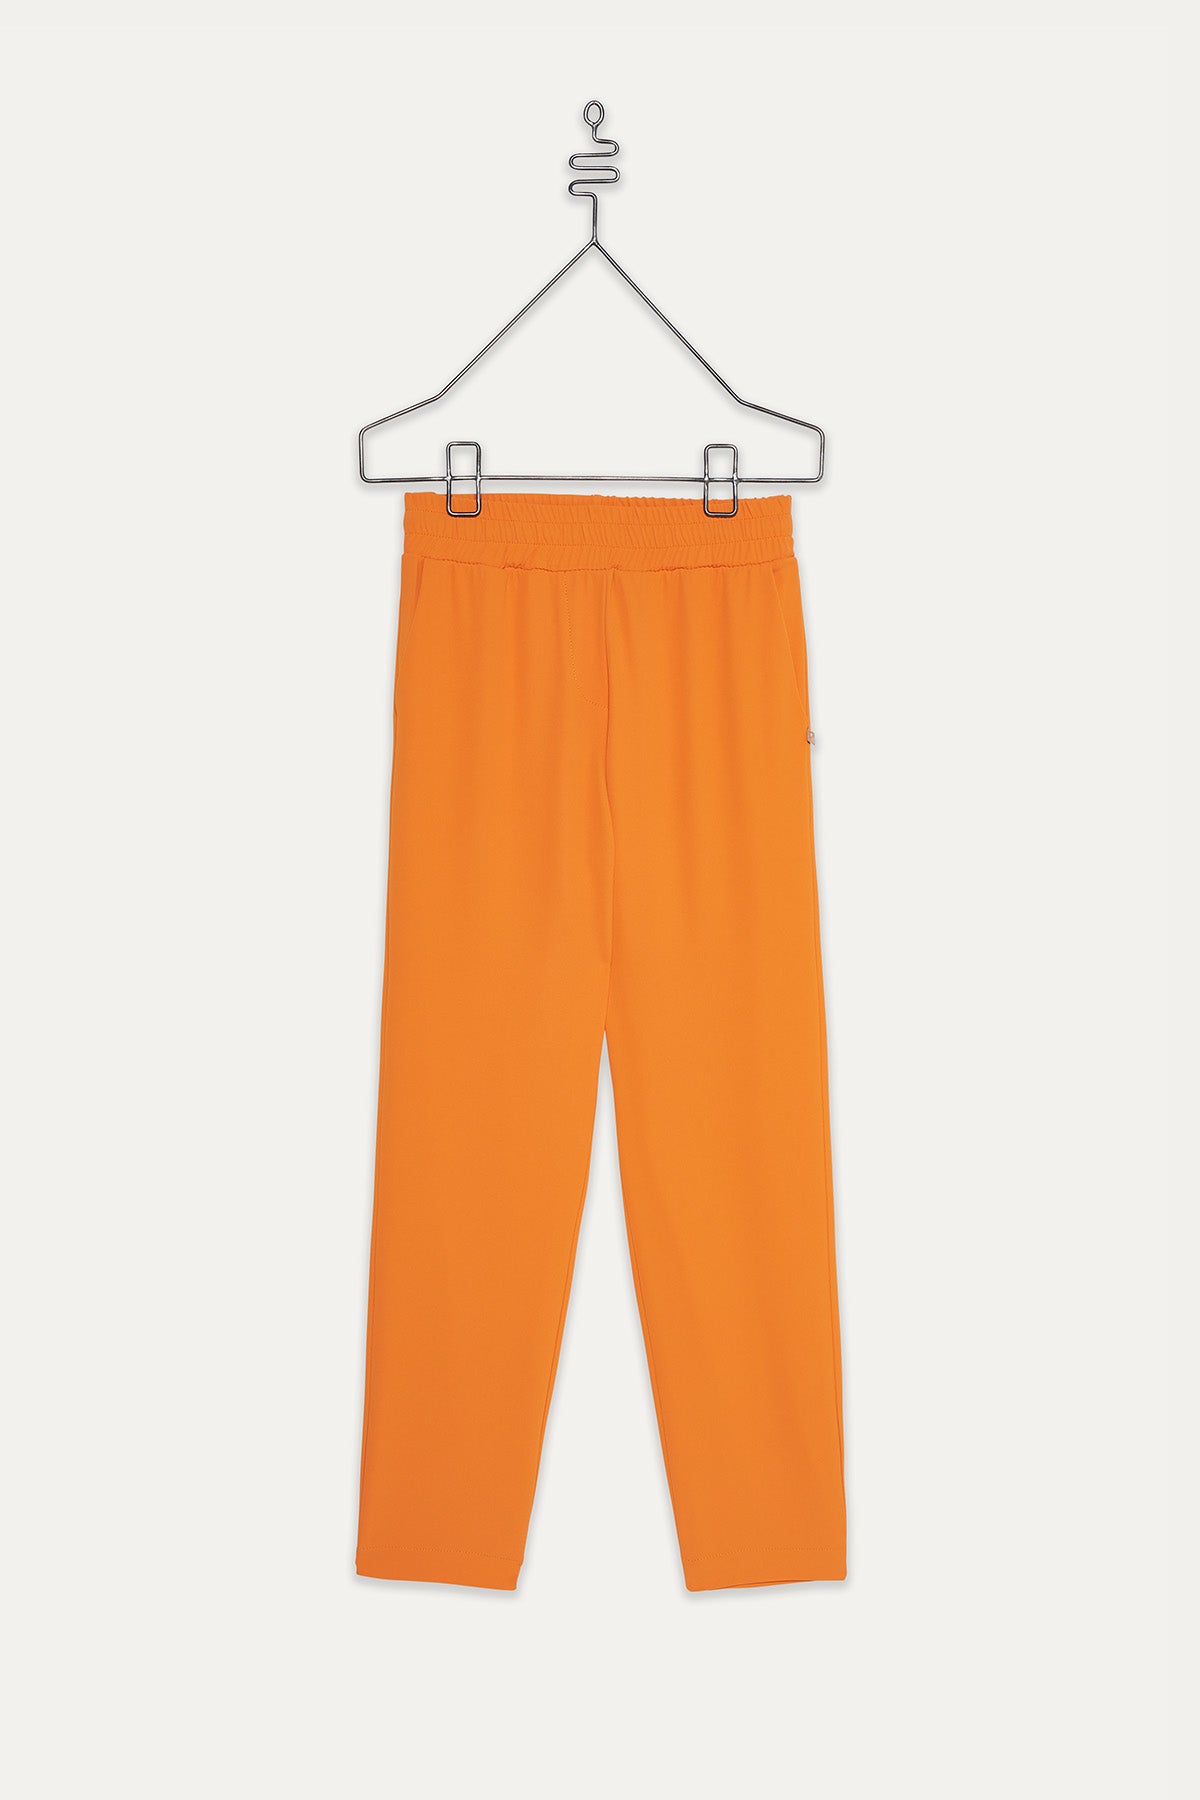 Sunny Orange Pants